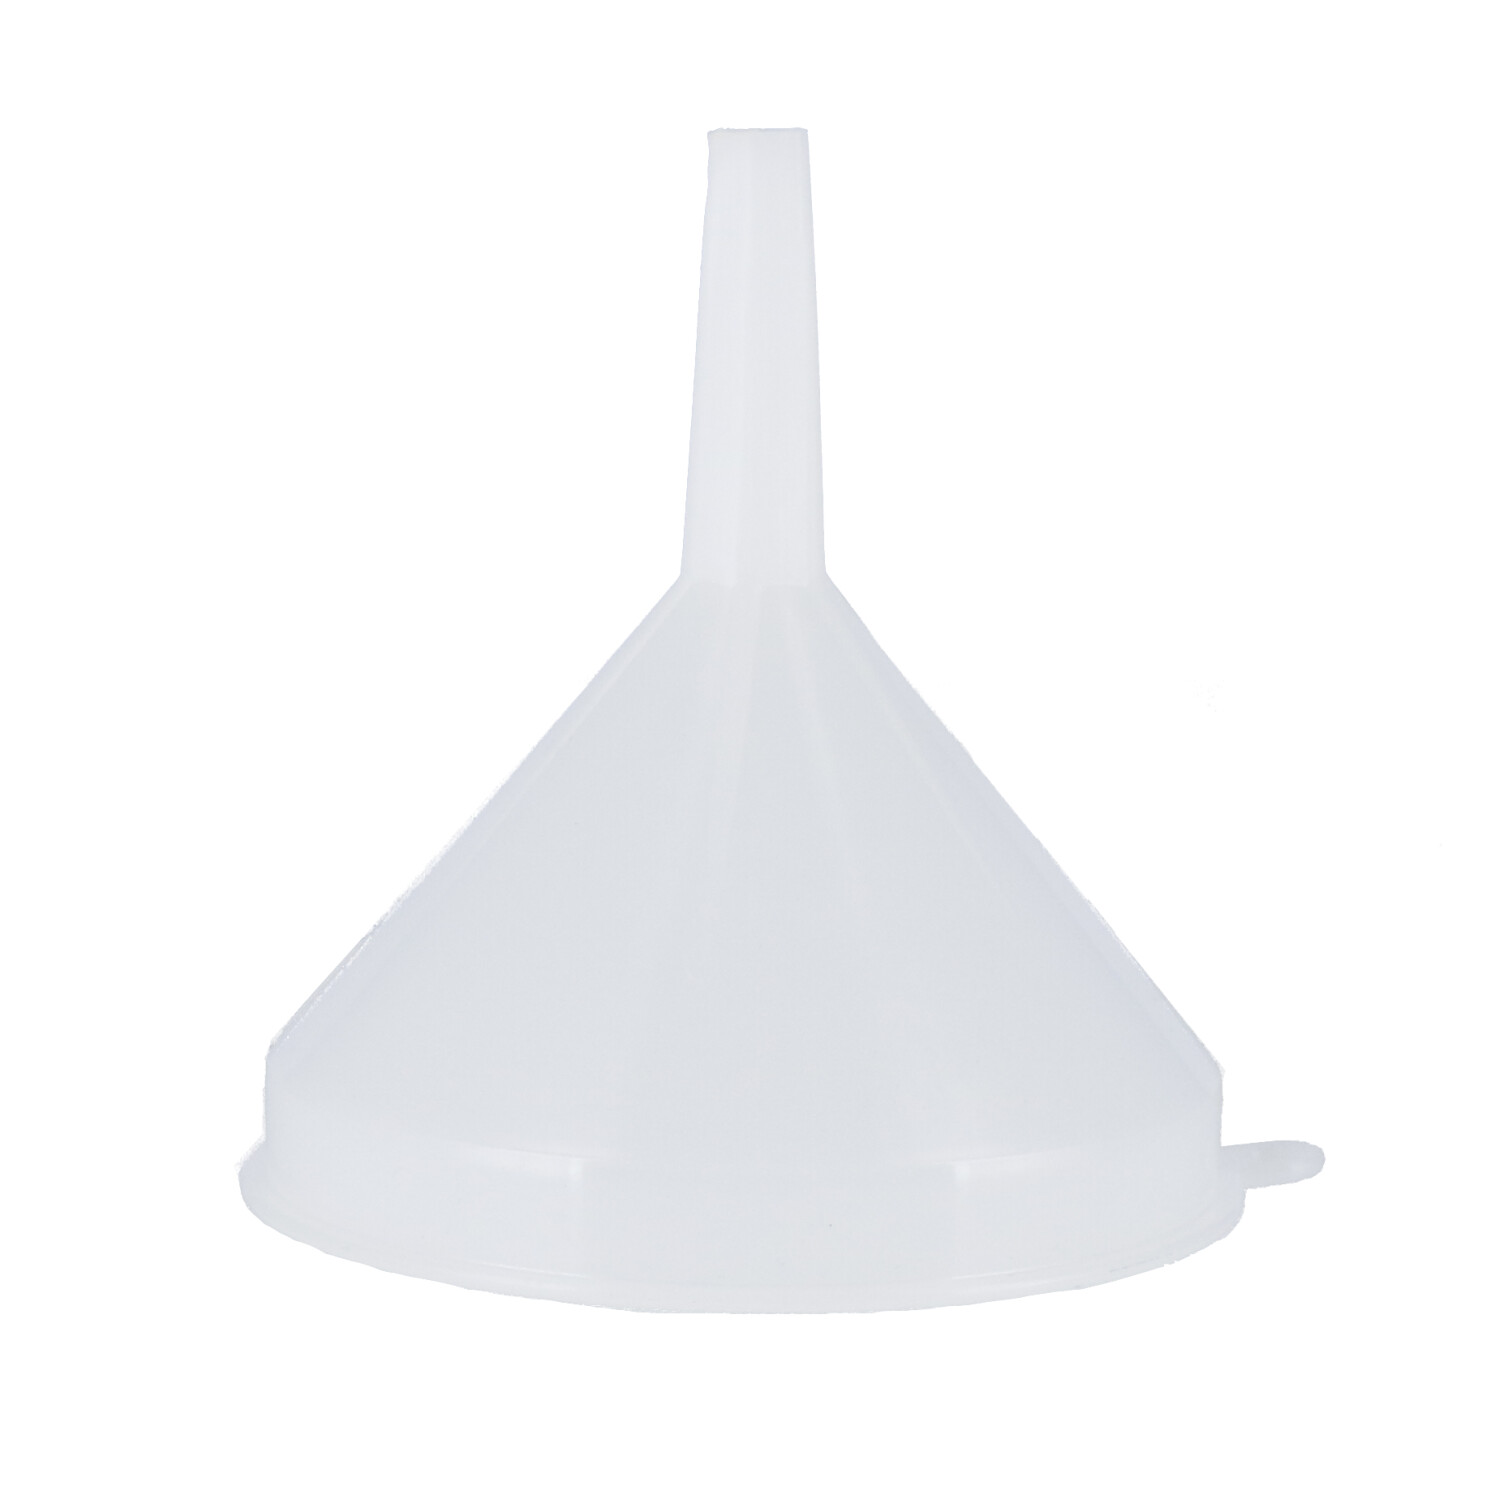 Funnel with Sieve- White Plastic Ø 12 cm